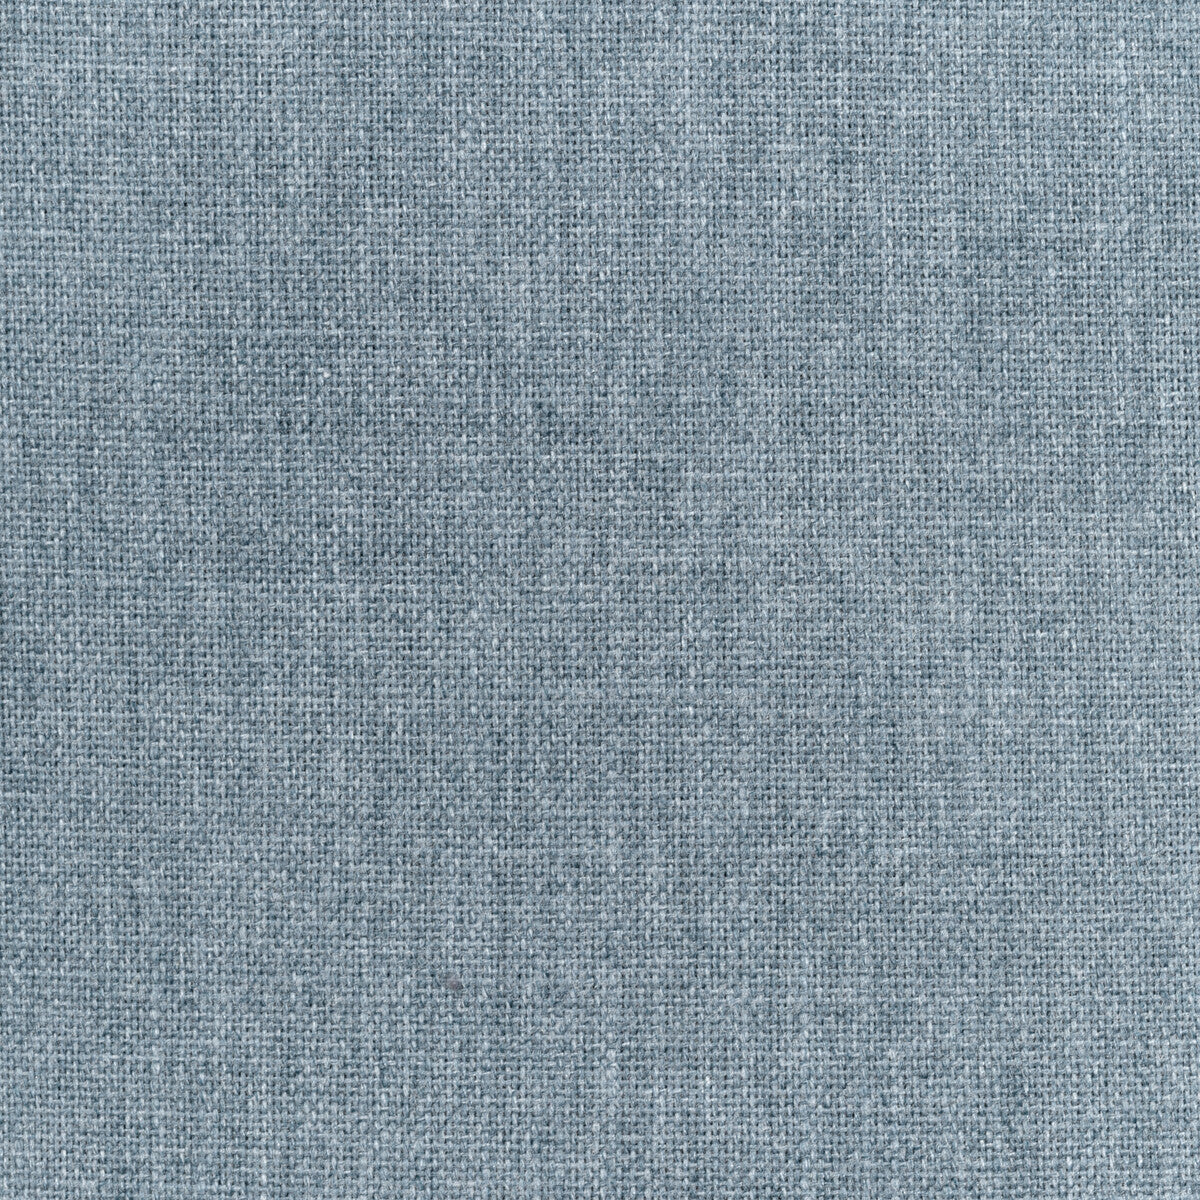 Kravet Smart fabric in 36112-1521 color - pattern 36112.1521.0 - by Kravet Smart in the Performance Kravetarmor collection